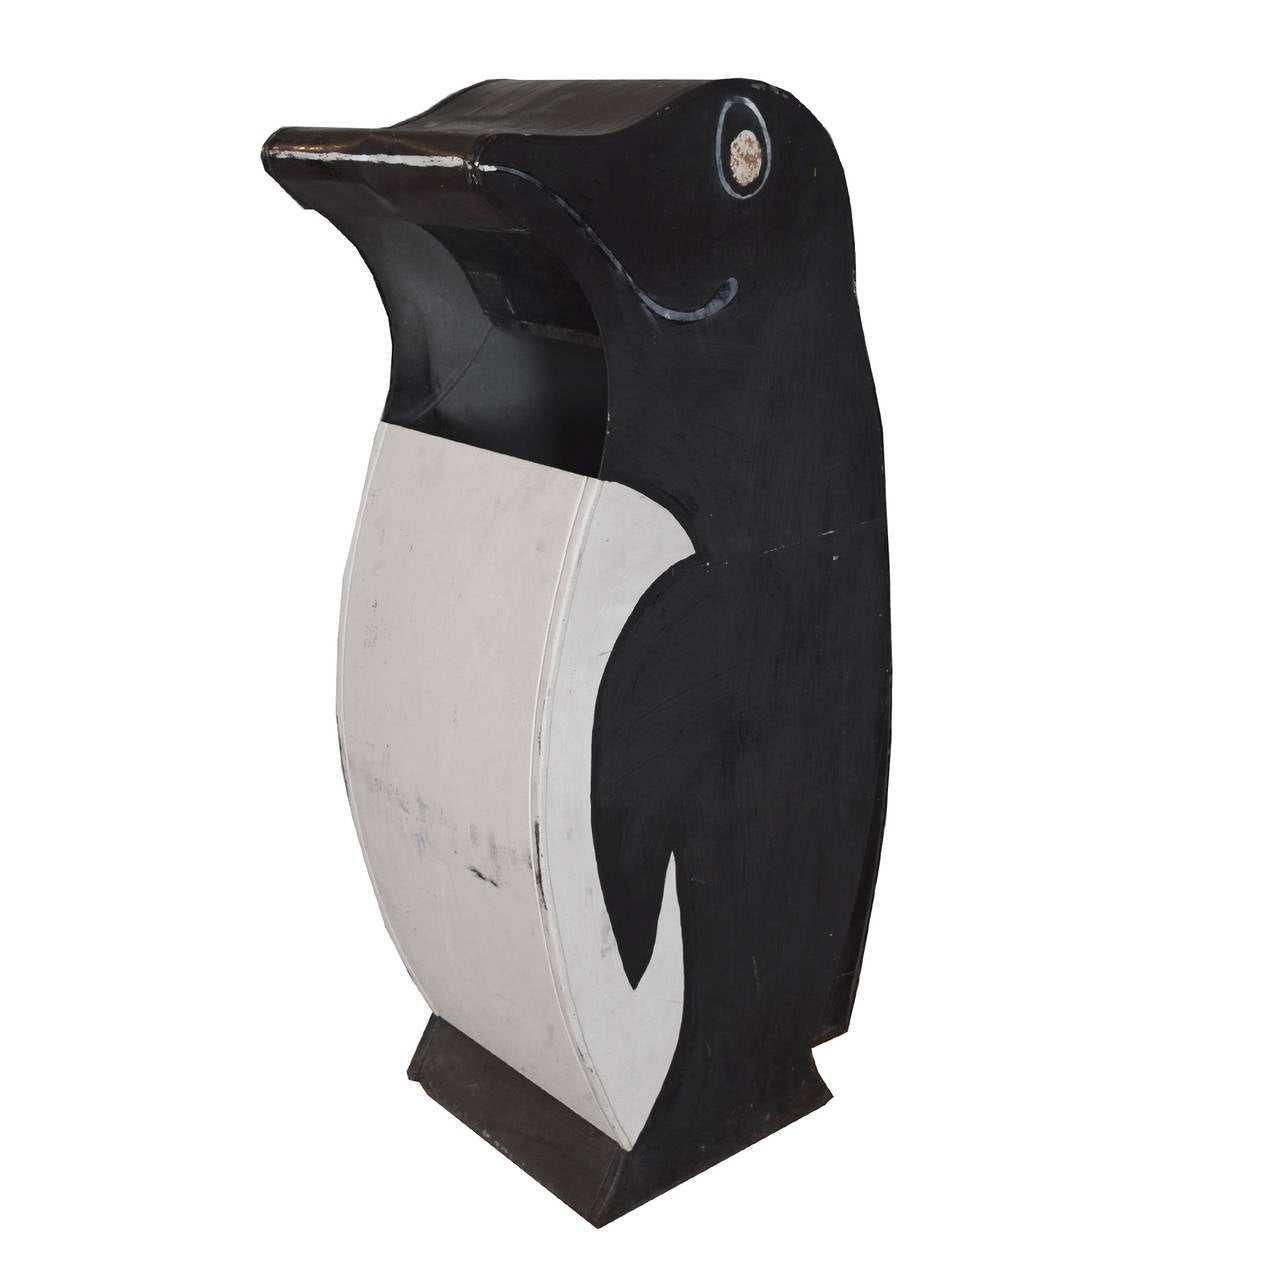 penguin trash can